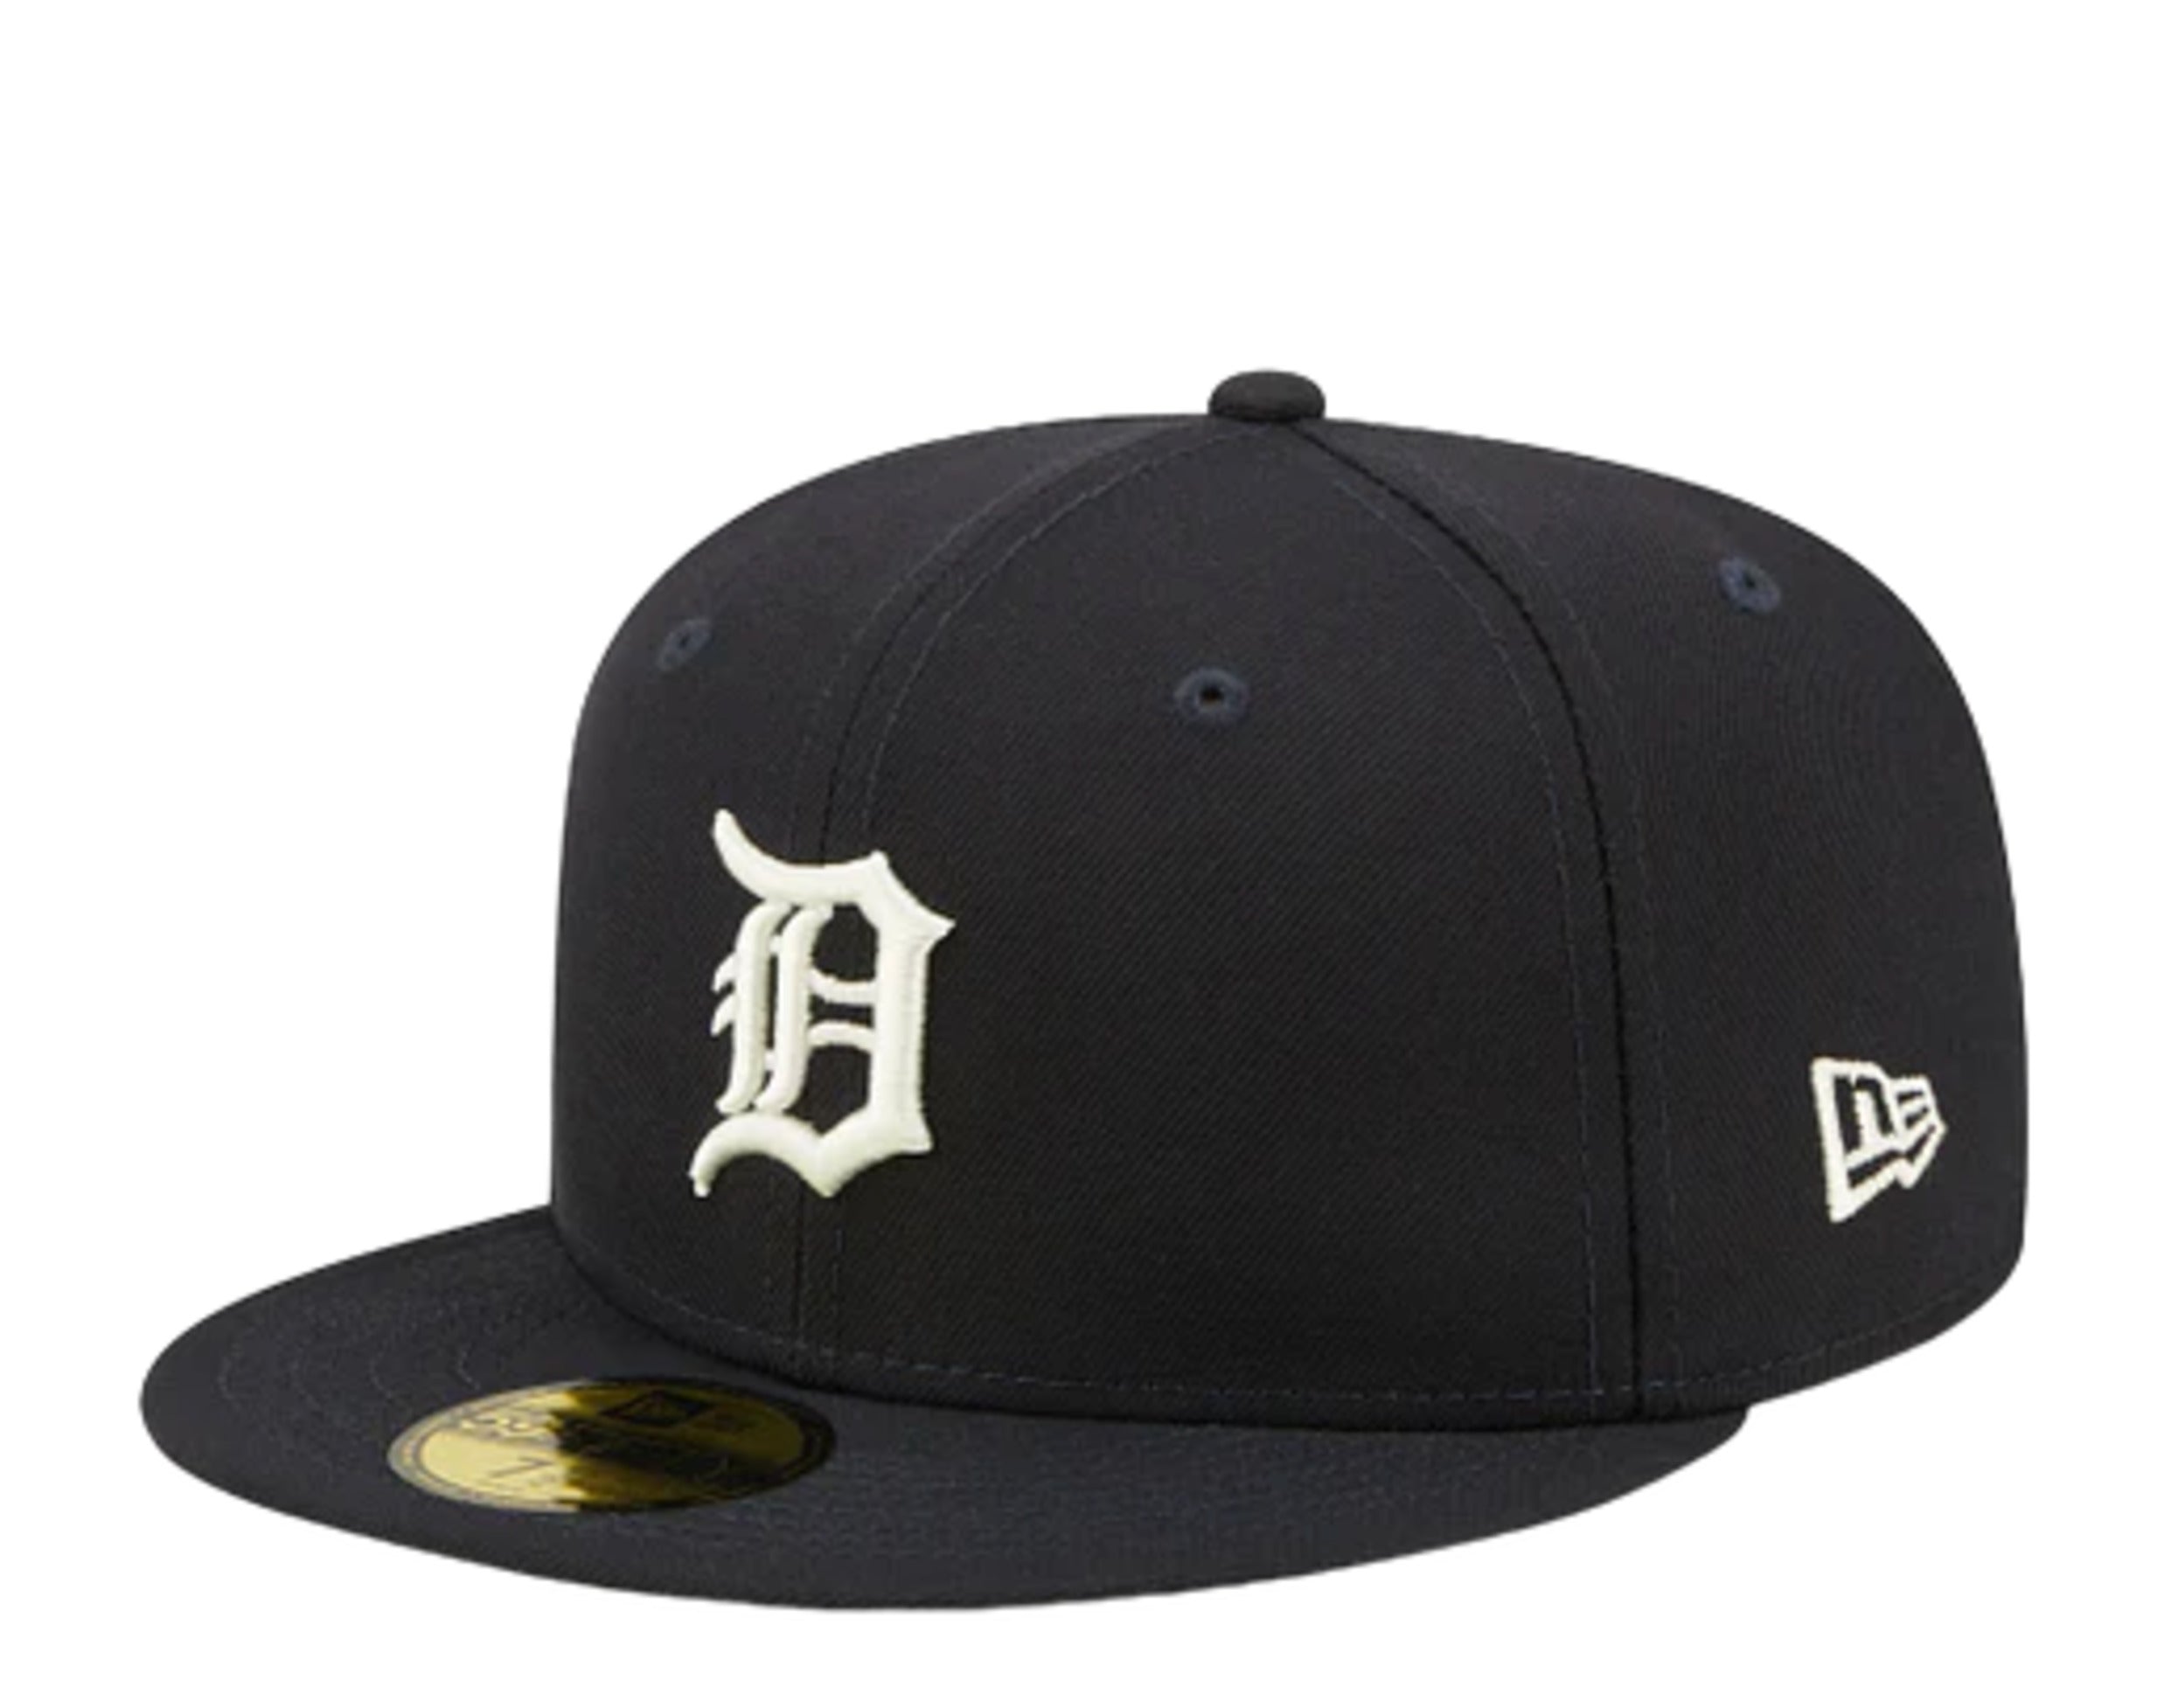 New Era 59fifty Prolight Fitted Hat Detroit Tigers size 7 1/2 Hatclub Lids